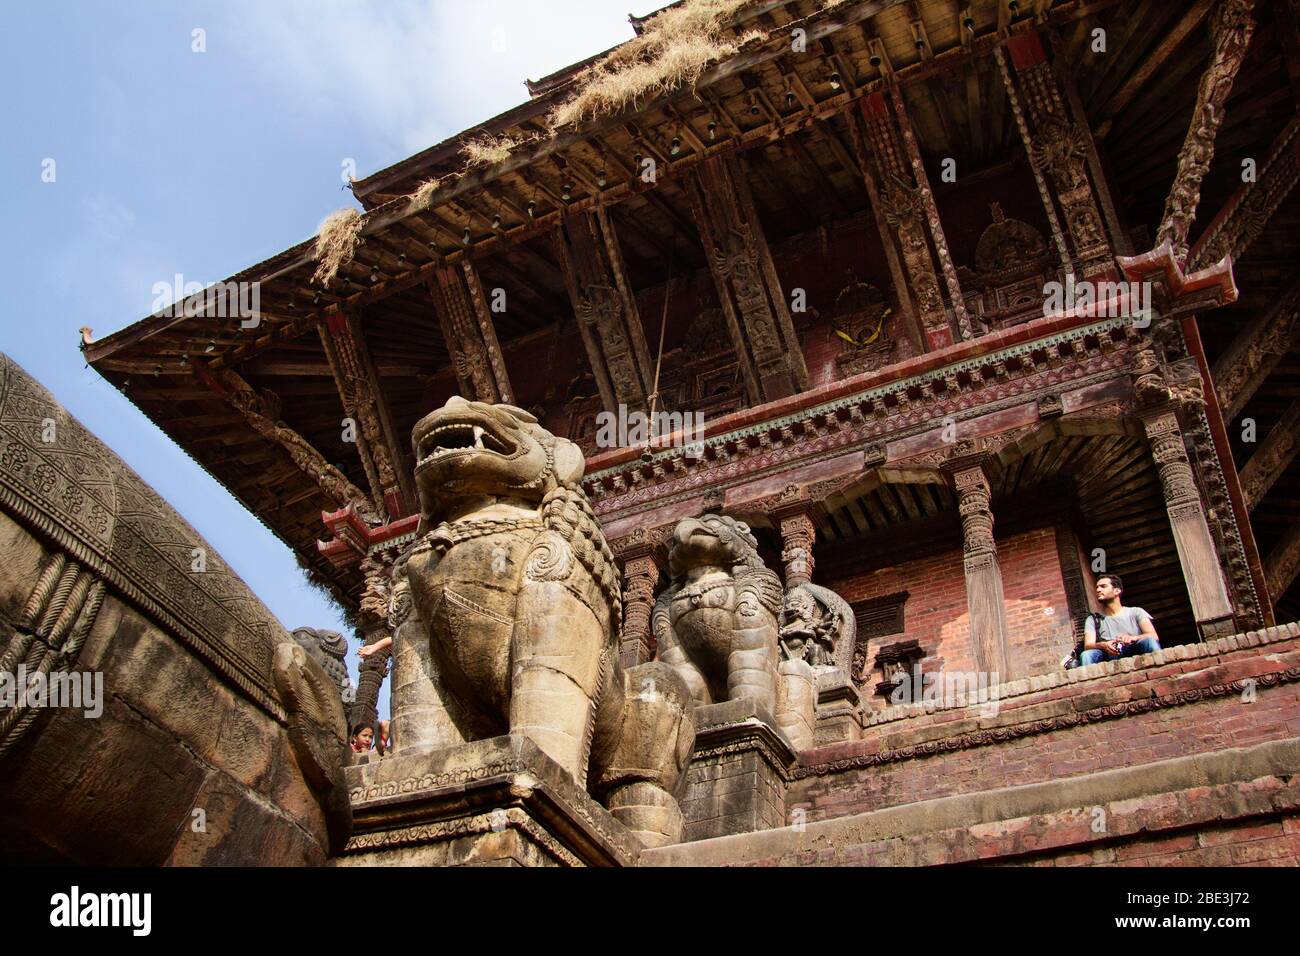 Nepal, Kathmandu, Bhaktapur, Nyatapola, Temple, Hinduism, Street, People, Tourist, Village, Detail. Statue, Rest, Relax Stock Photo